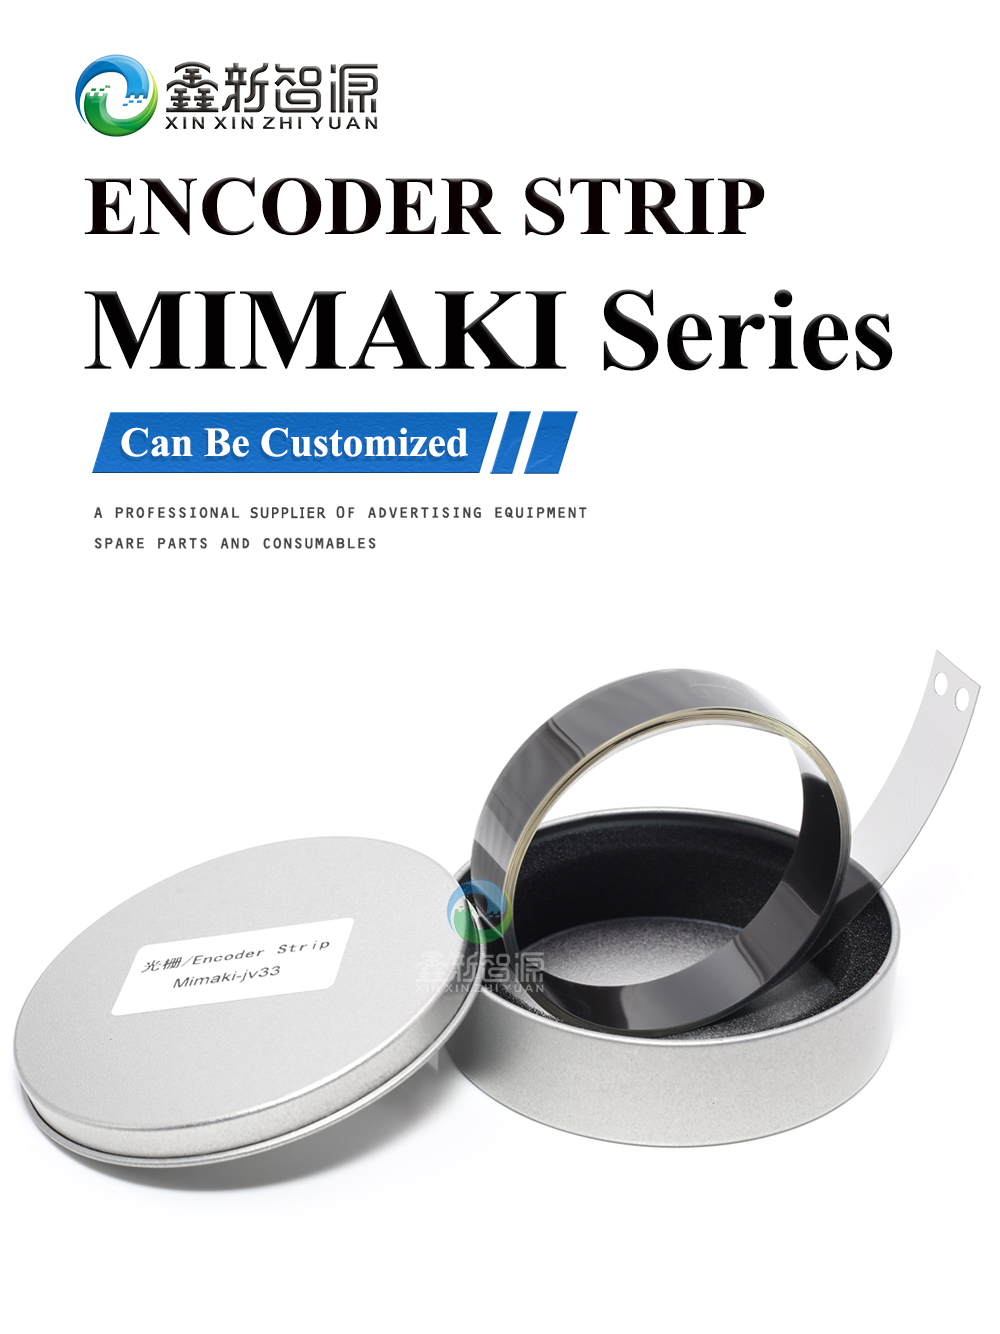 MIMAKI Series Encoder Strip